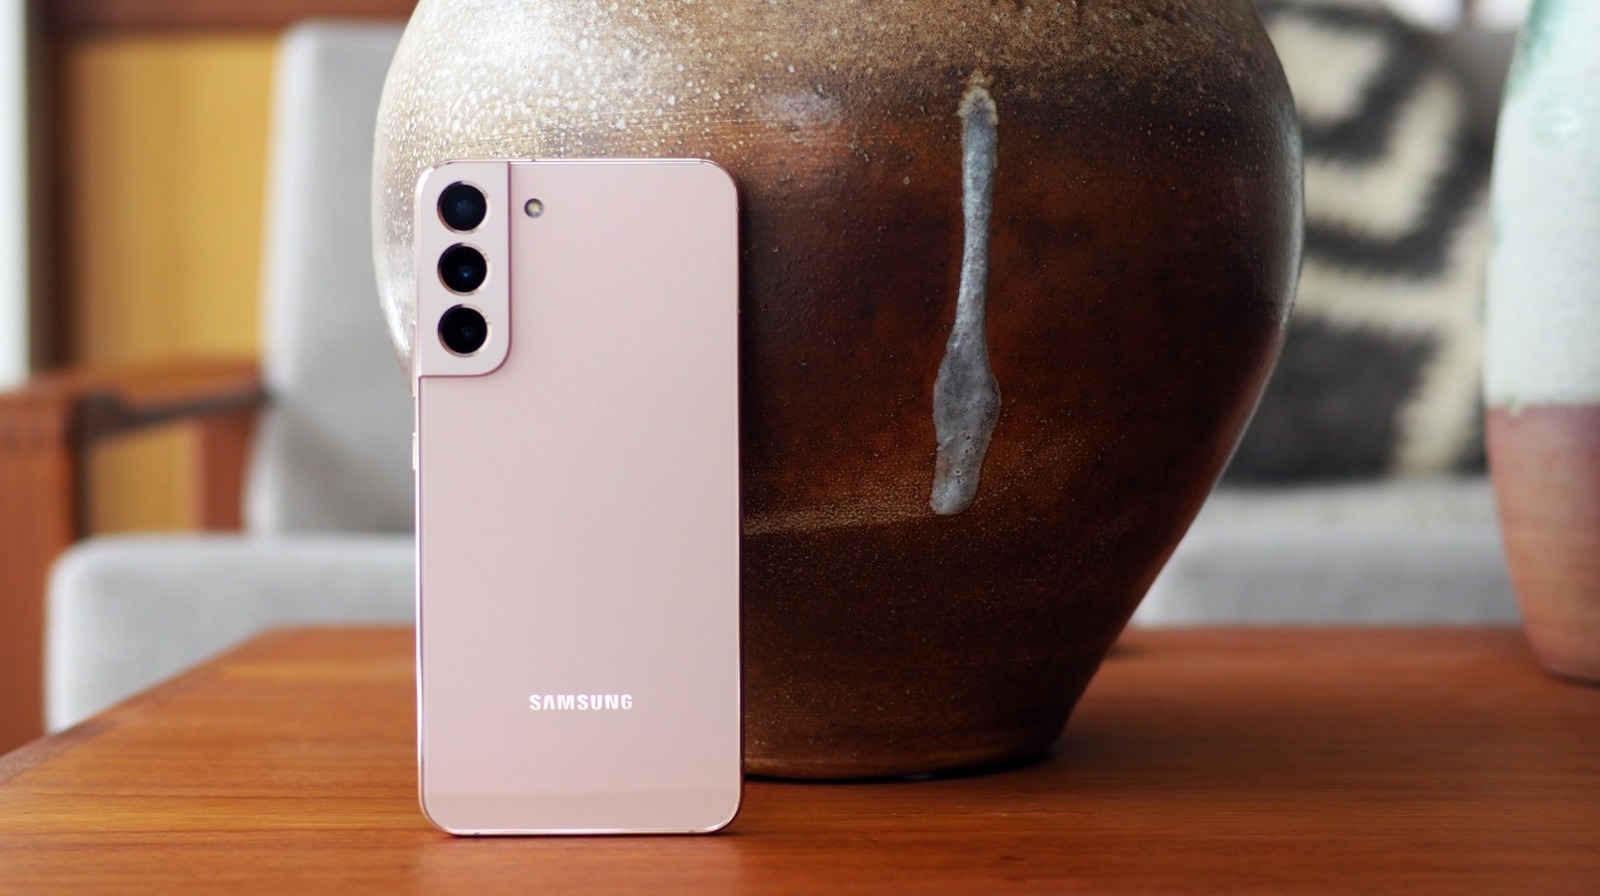 Samsung Galaxy S23 5g (128gb) Unlocked Smartphone – Lavender : Target